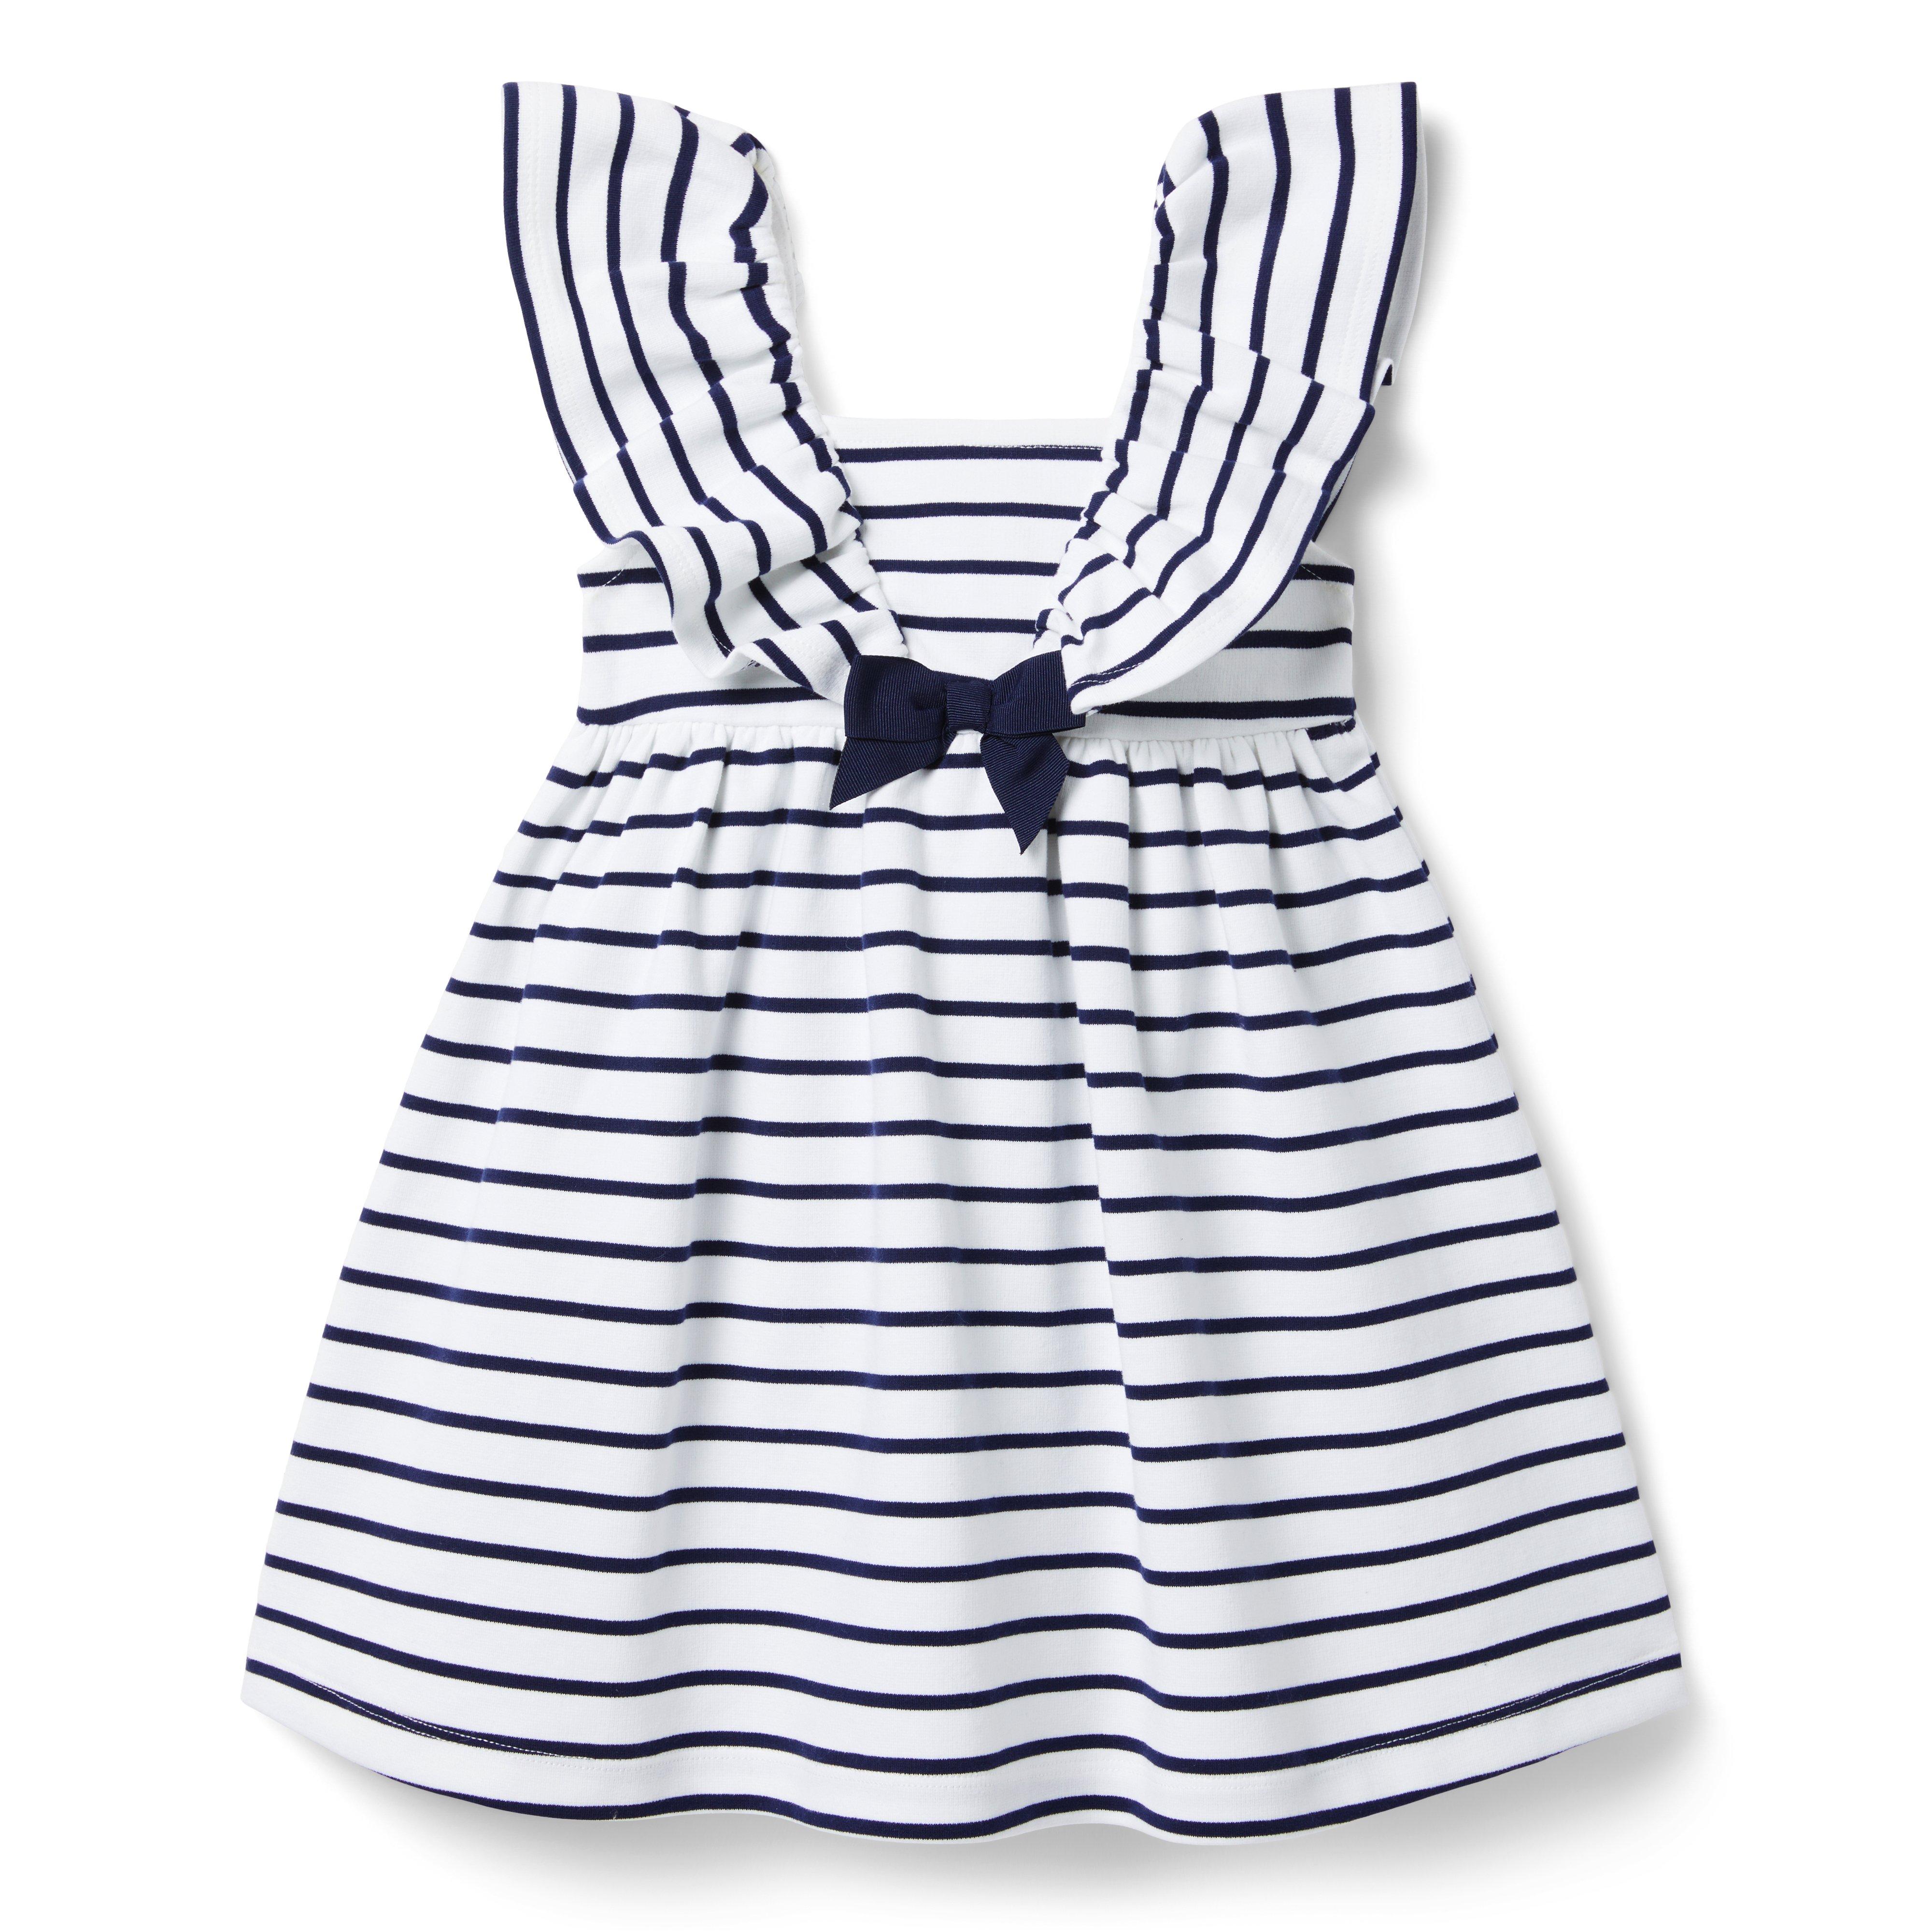 Thin Horizontal Stripe Dress A-Line Dress for Sale by deanworld